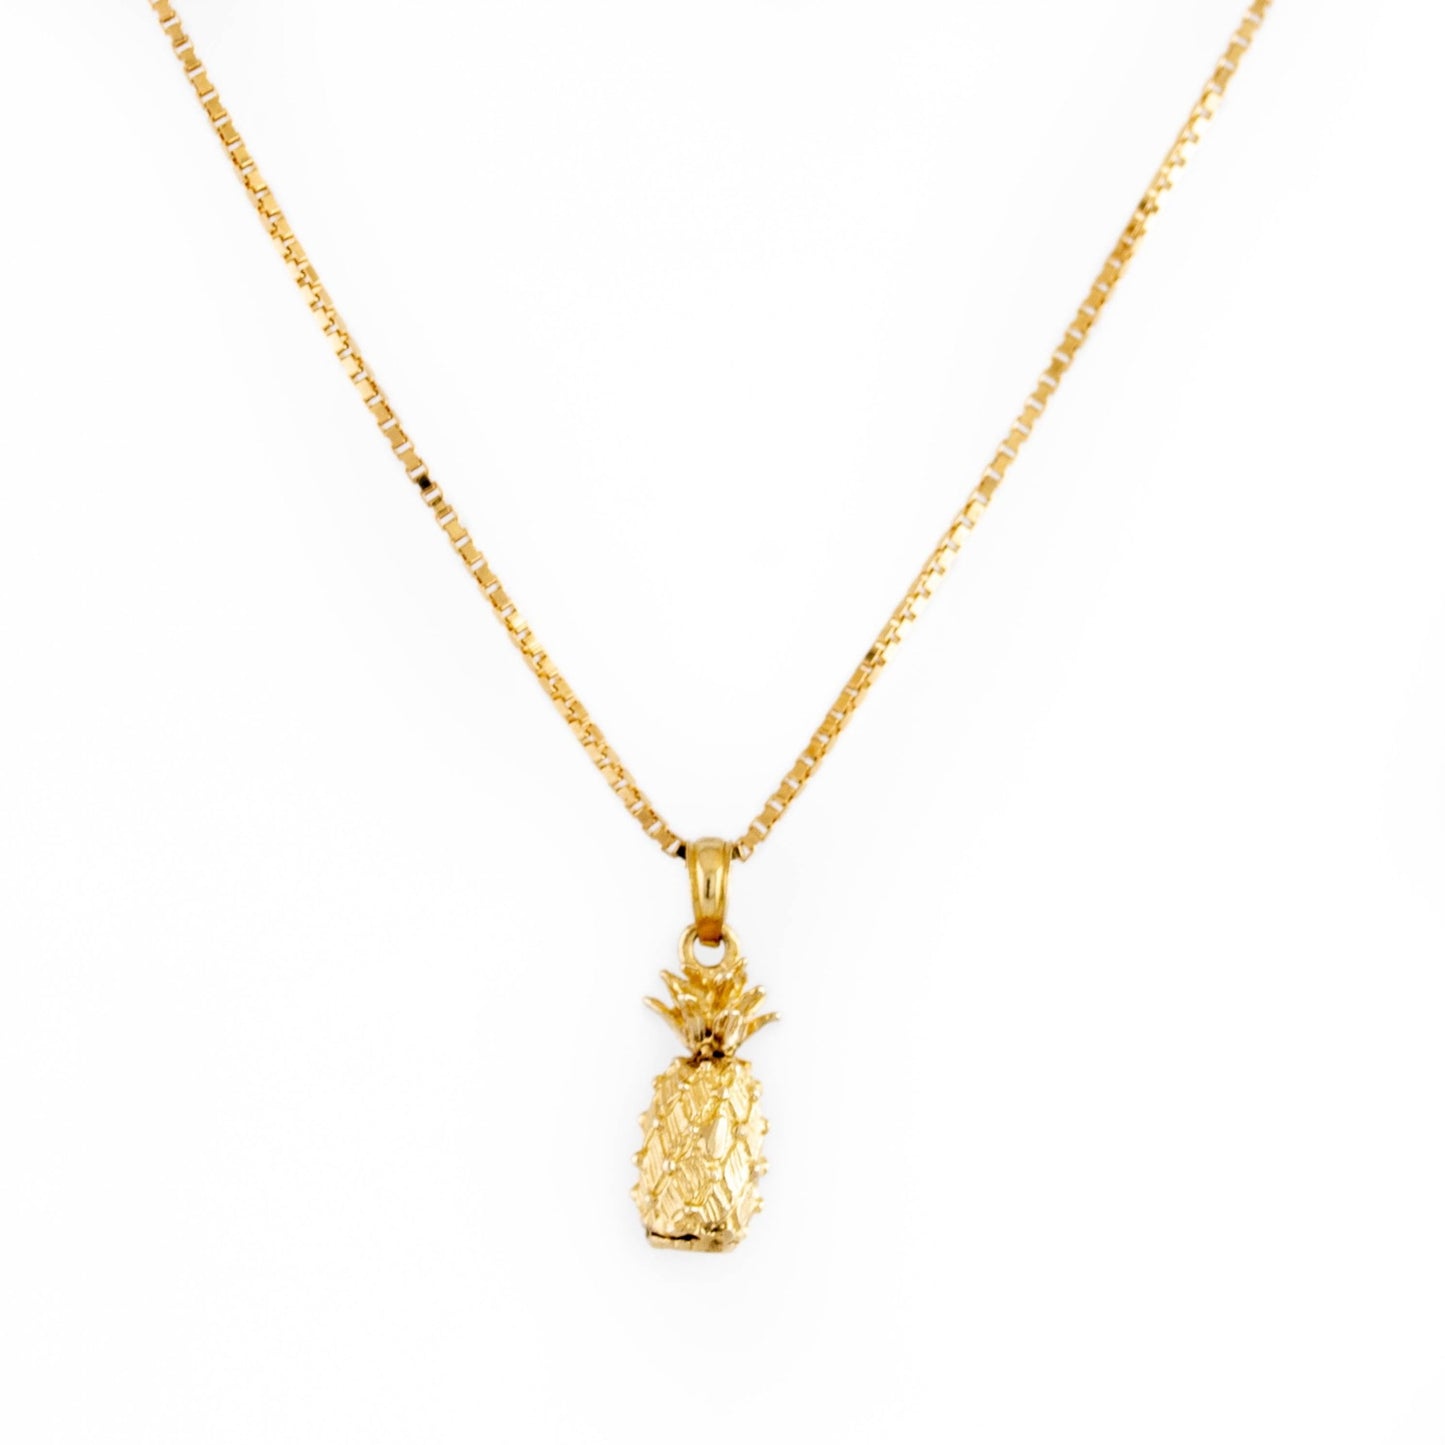 Gold Pineapple Charm Pendant - Kingdom Jewelry